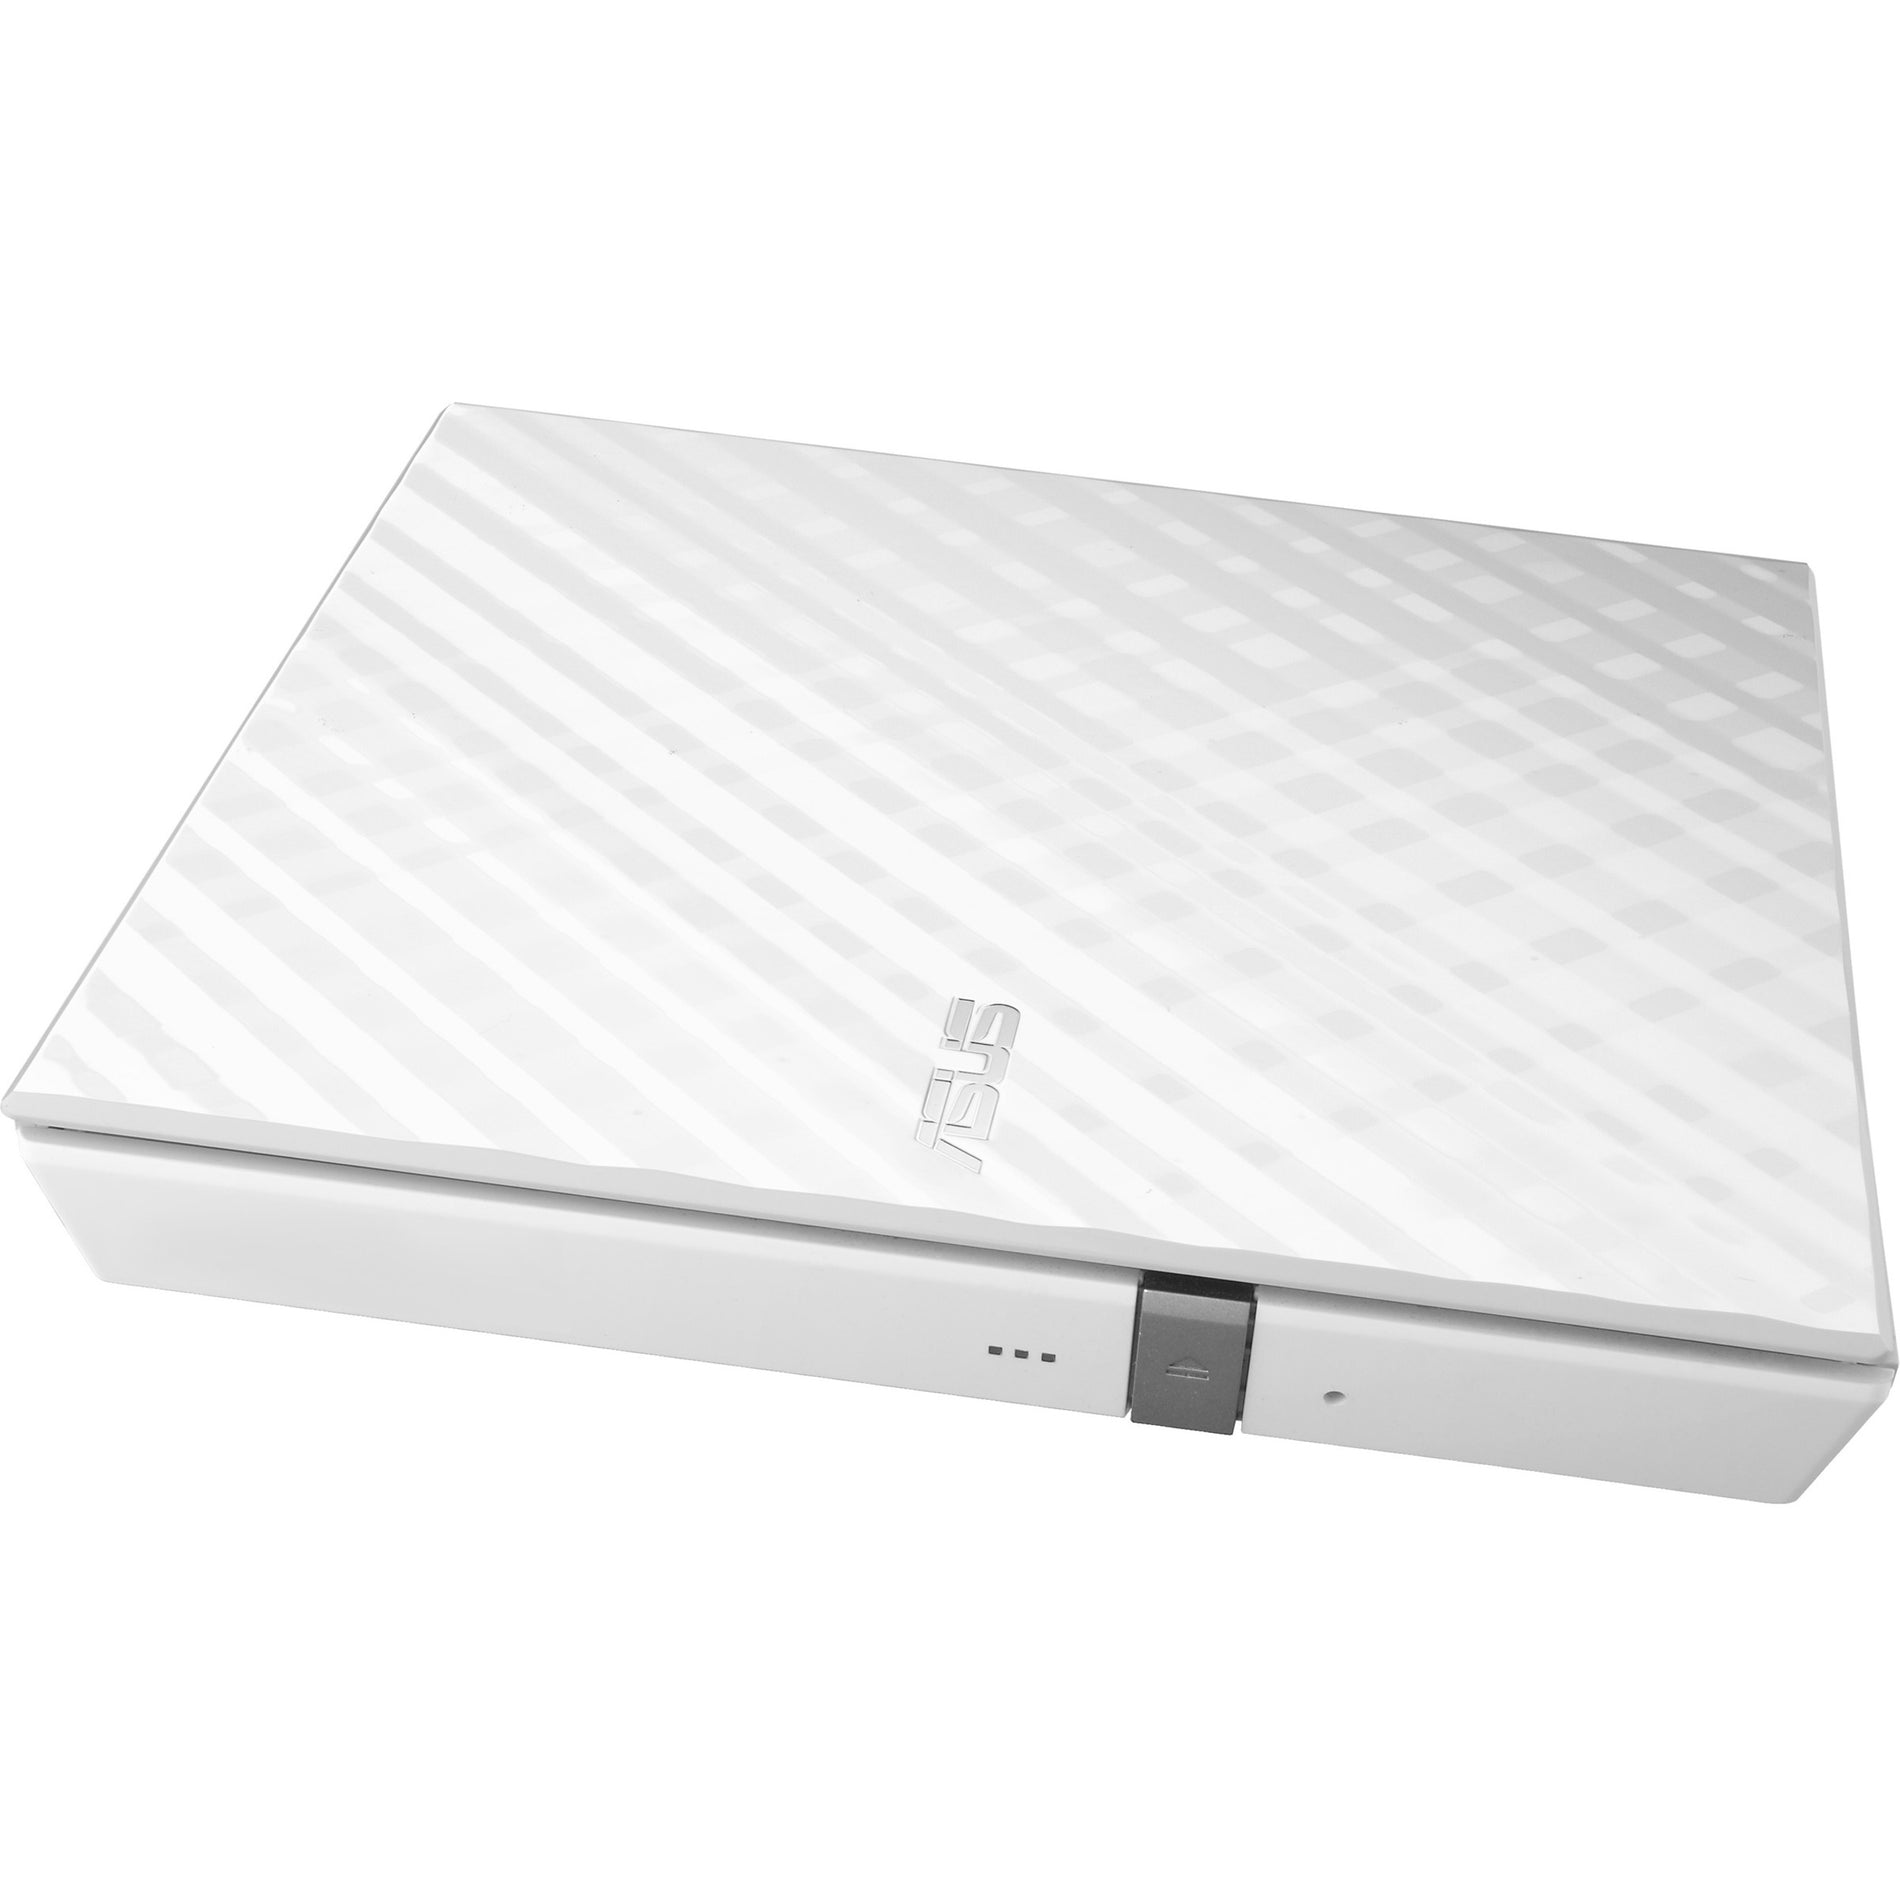 Asus SDRW-08D2S-U W G ACI External DVD Writer, White Slim Portable Diamond Cut Design